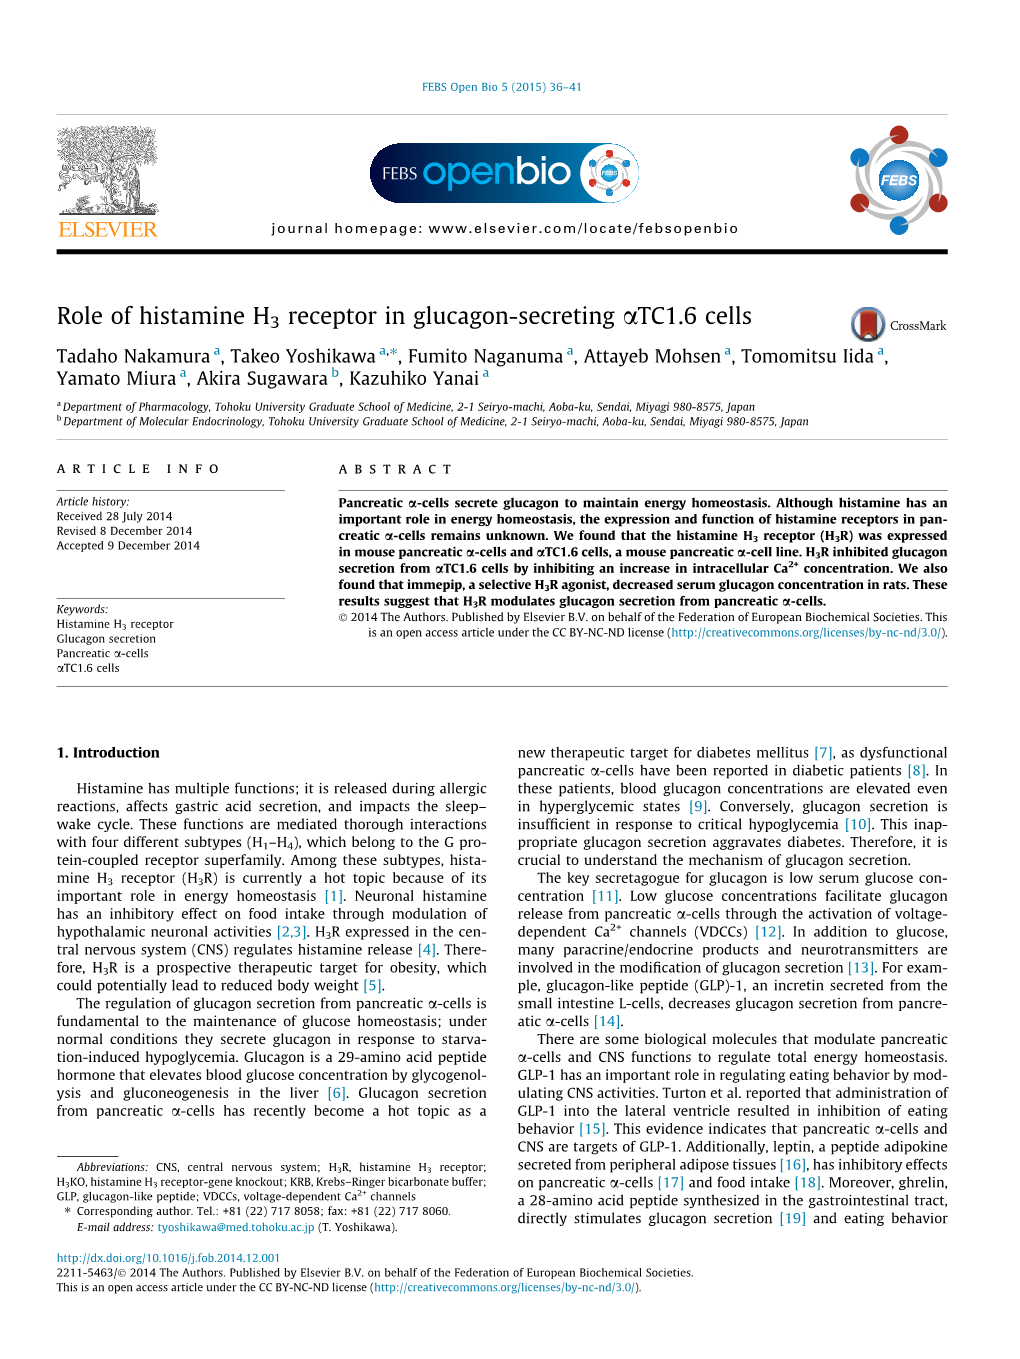 Role of Histamine H3 Receptor in Glucagon-Secreting Î±TC1.6 Cells